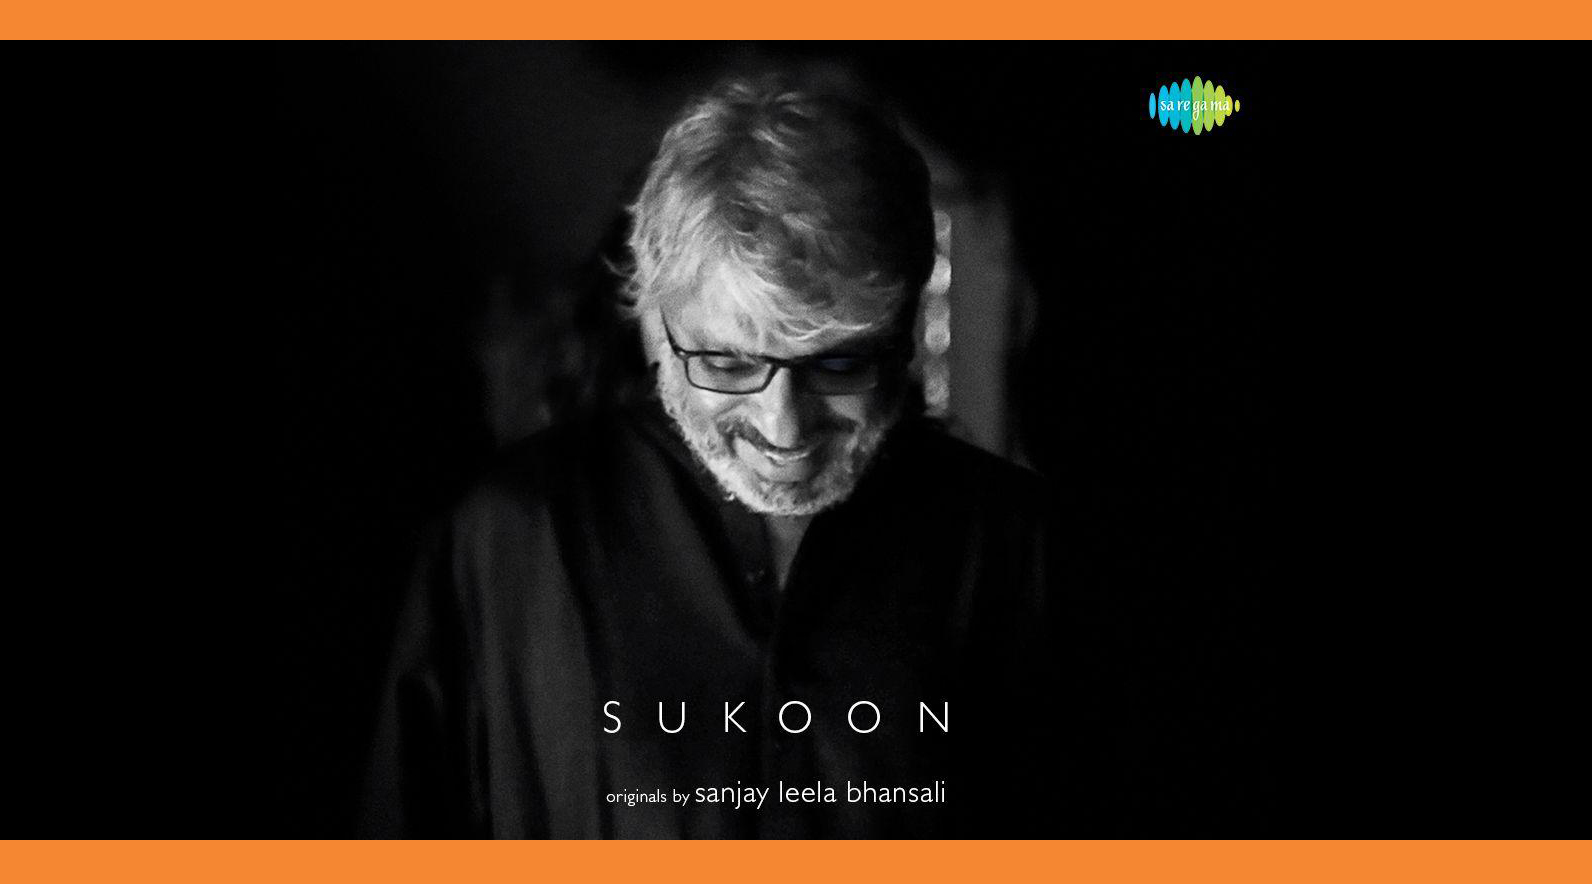 The 📀album Sukoon is out now! Sanjay Leela Bhansali once again creates magic with his 🎼music